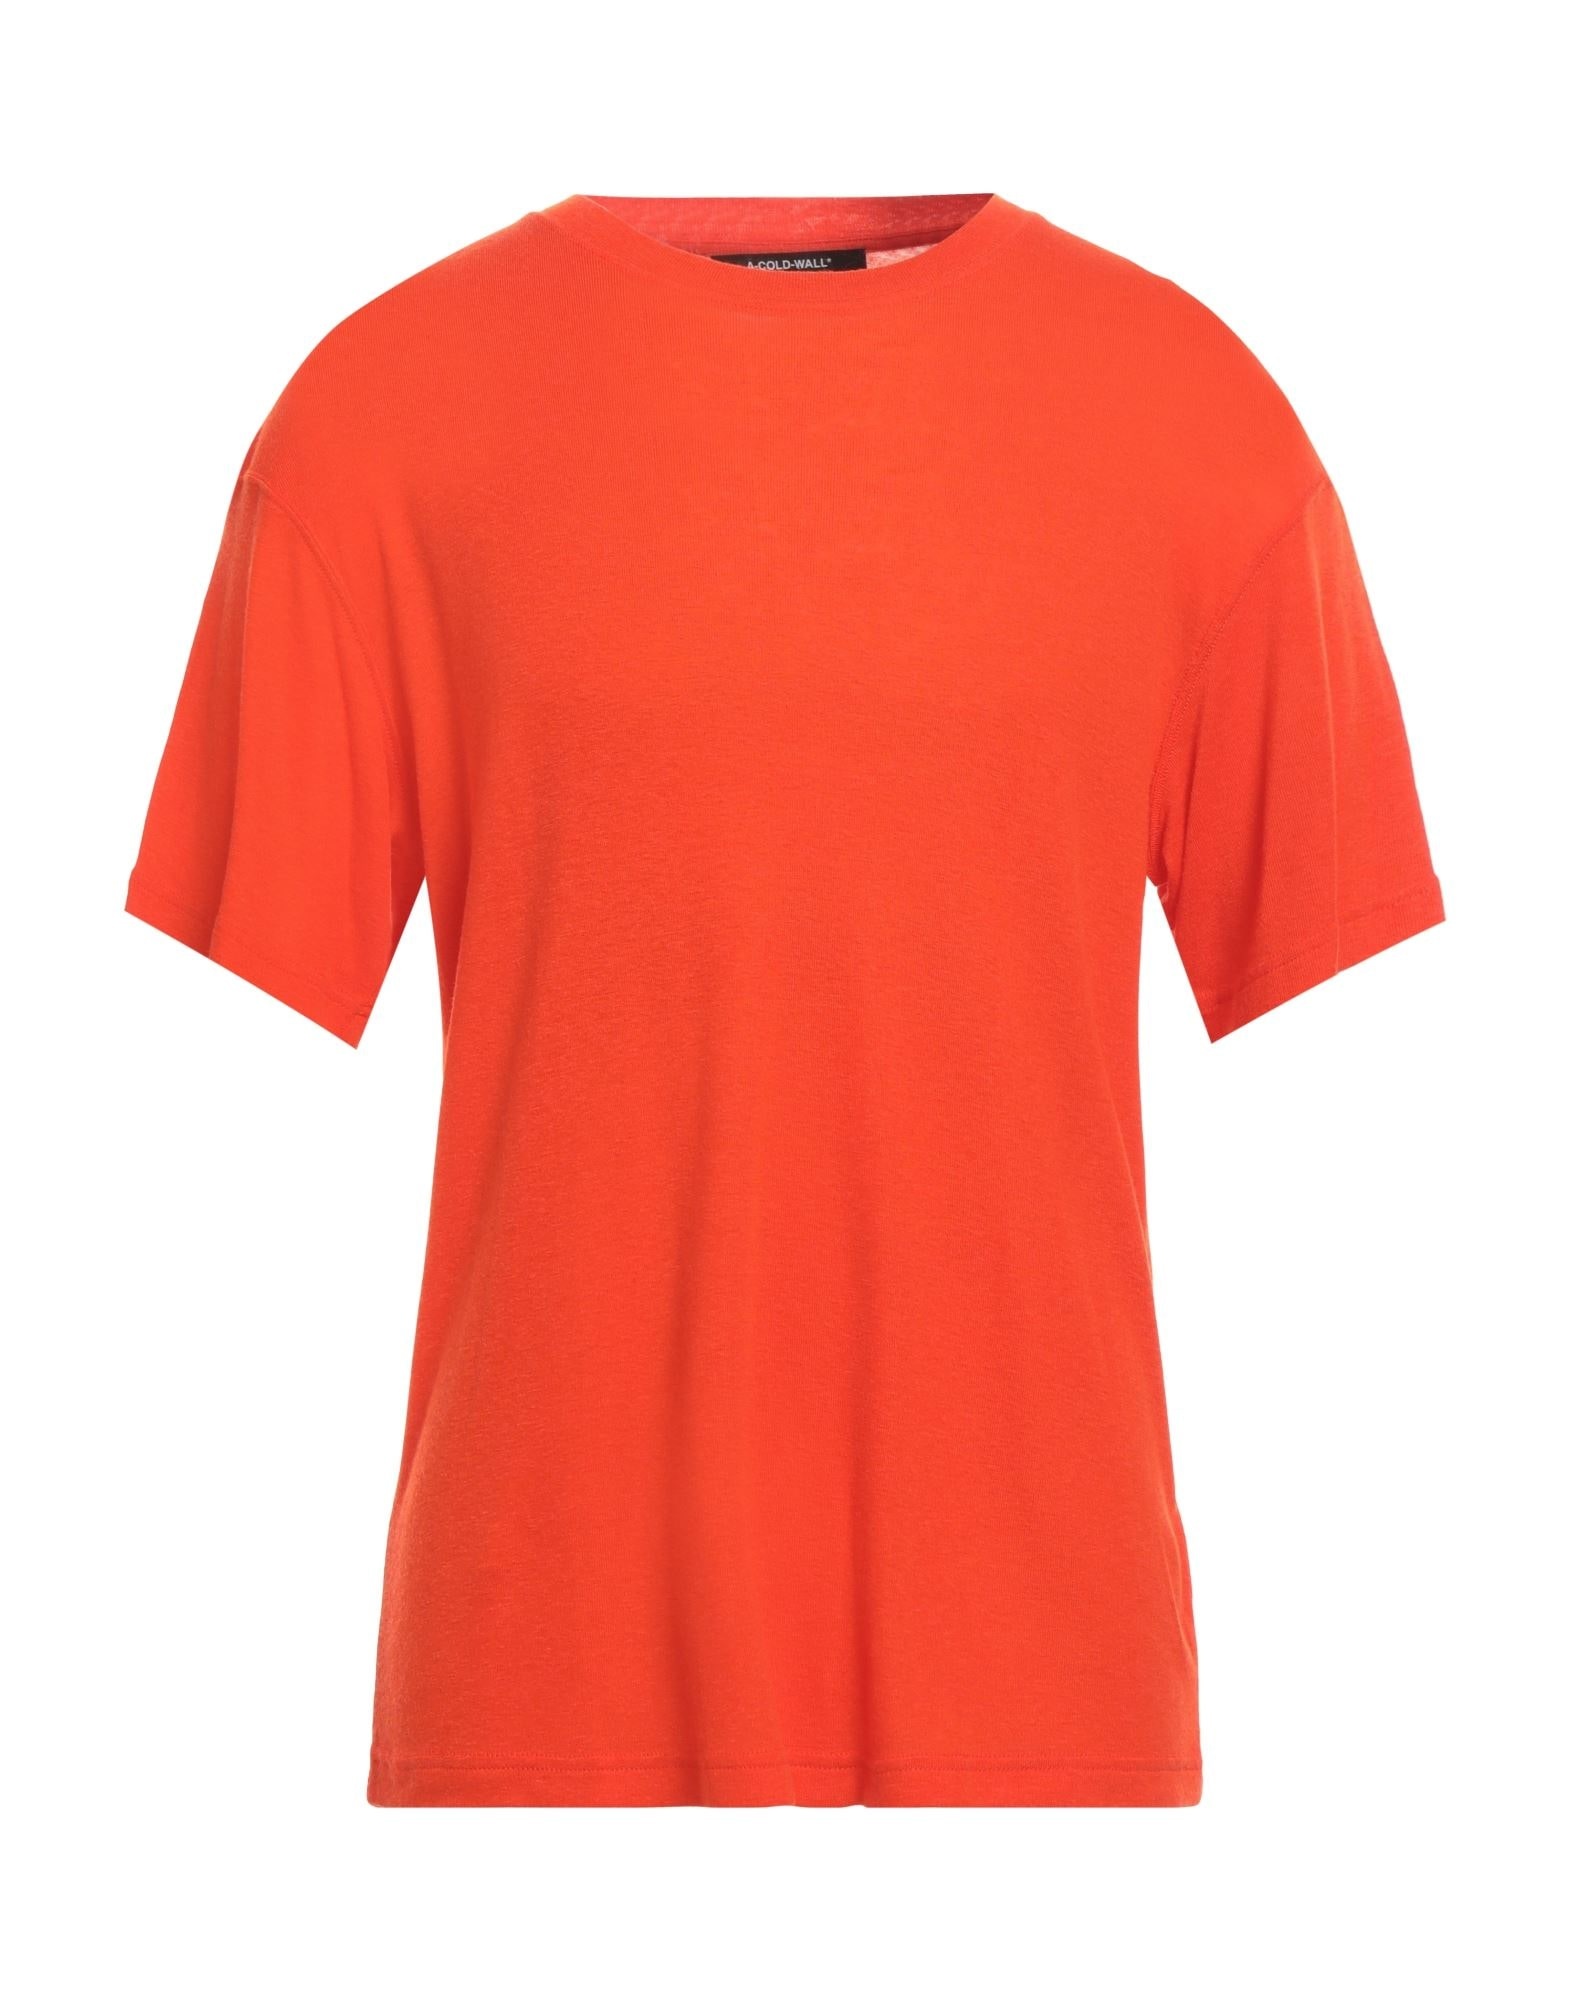 Orange Men's T-shirt - 1